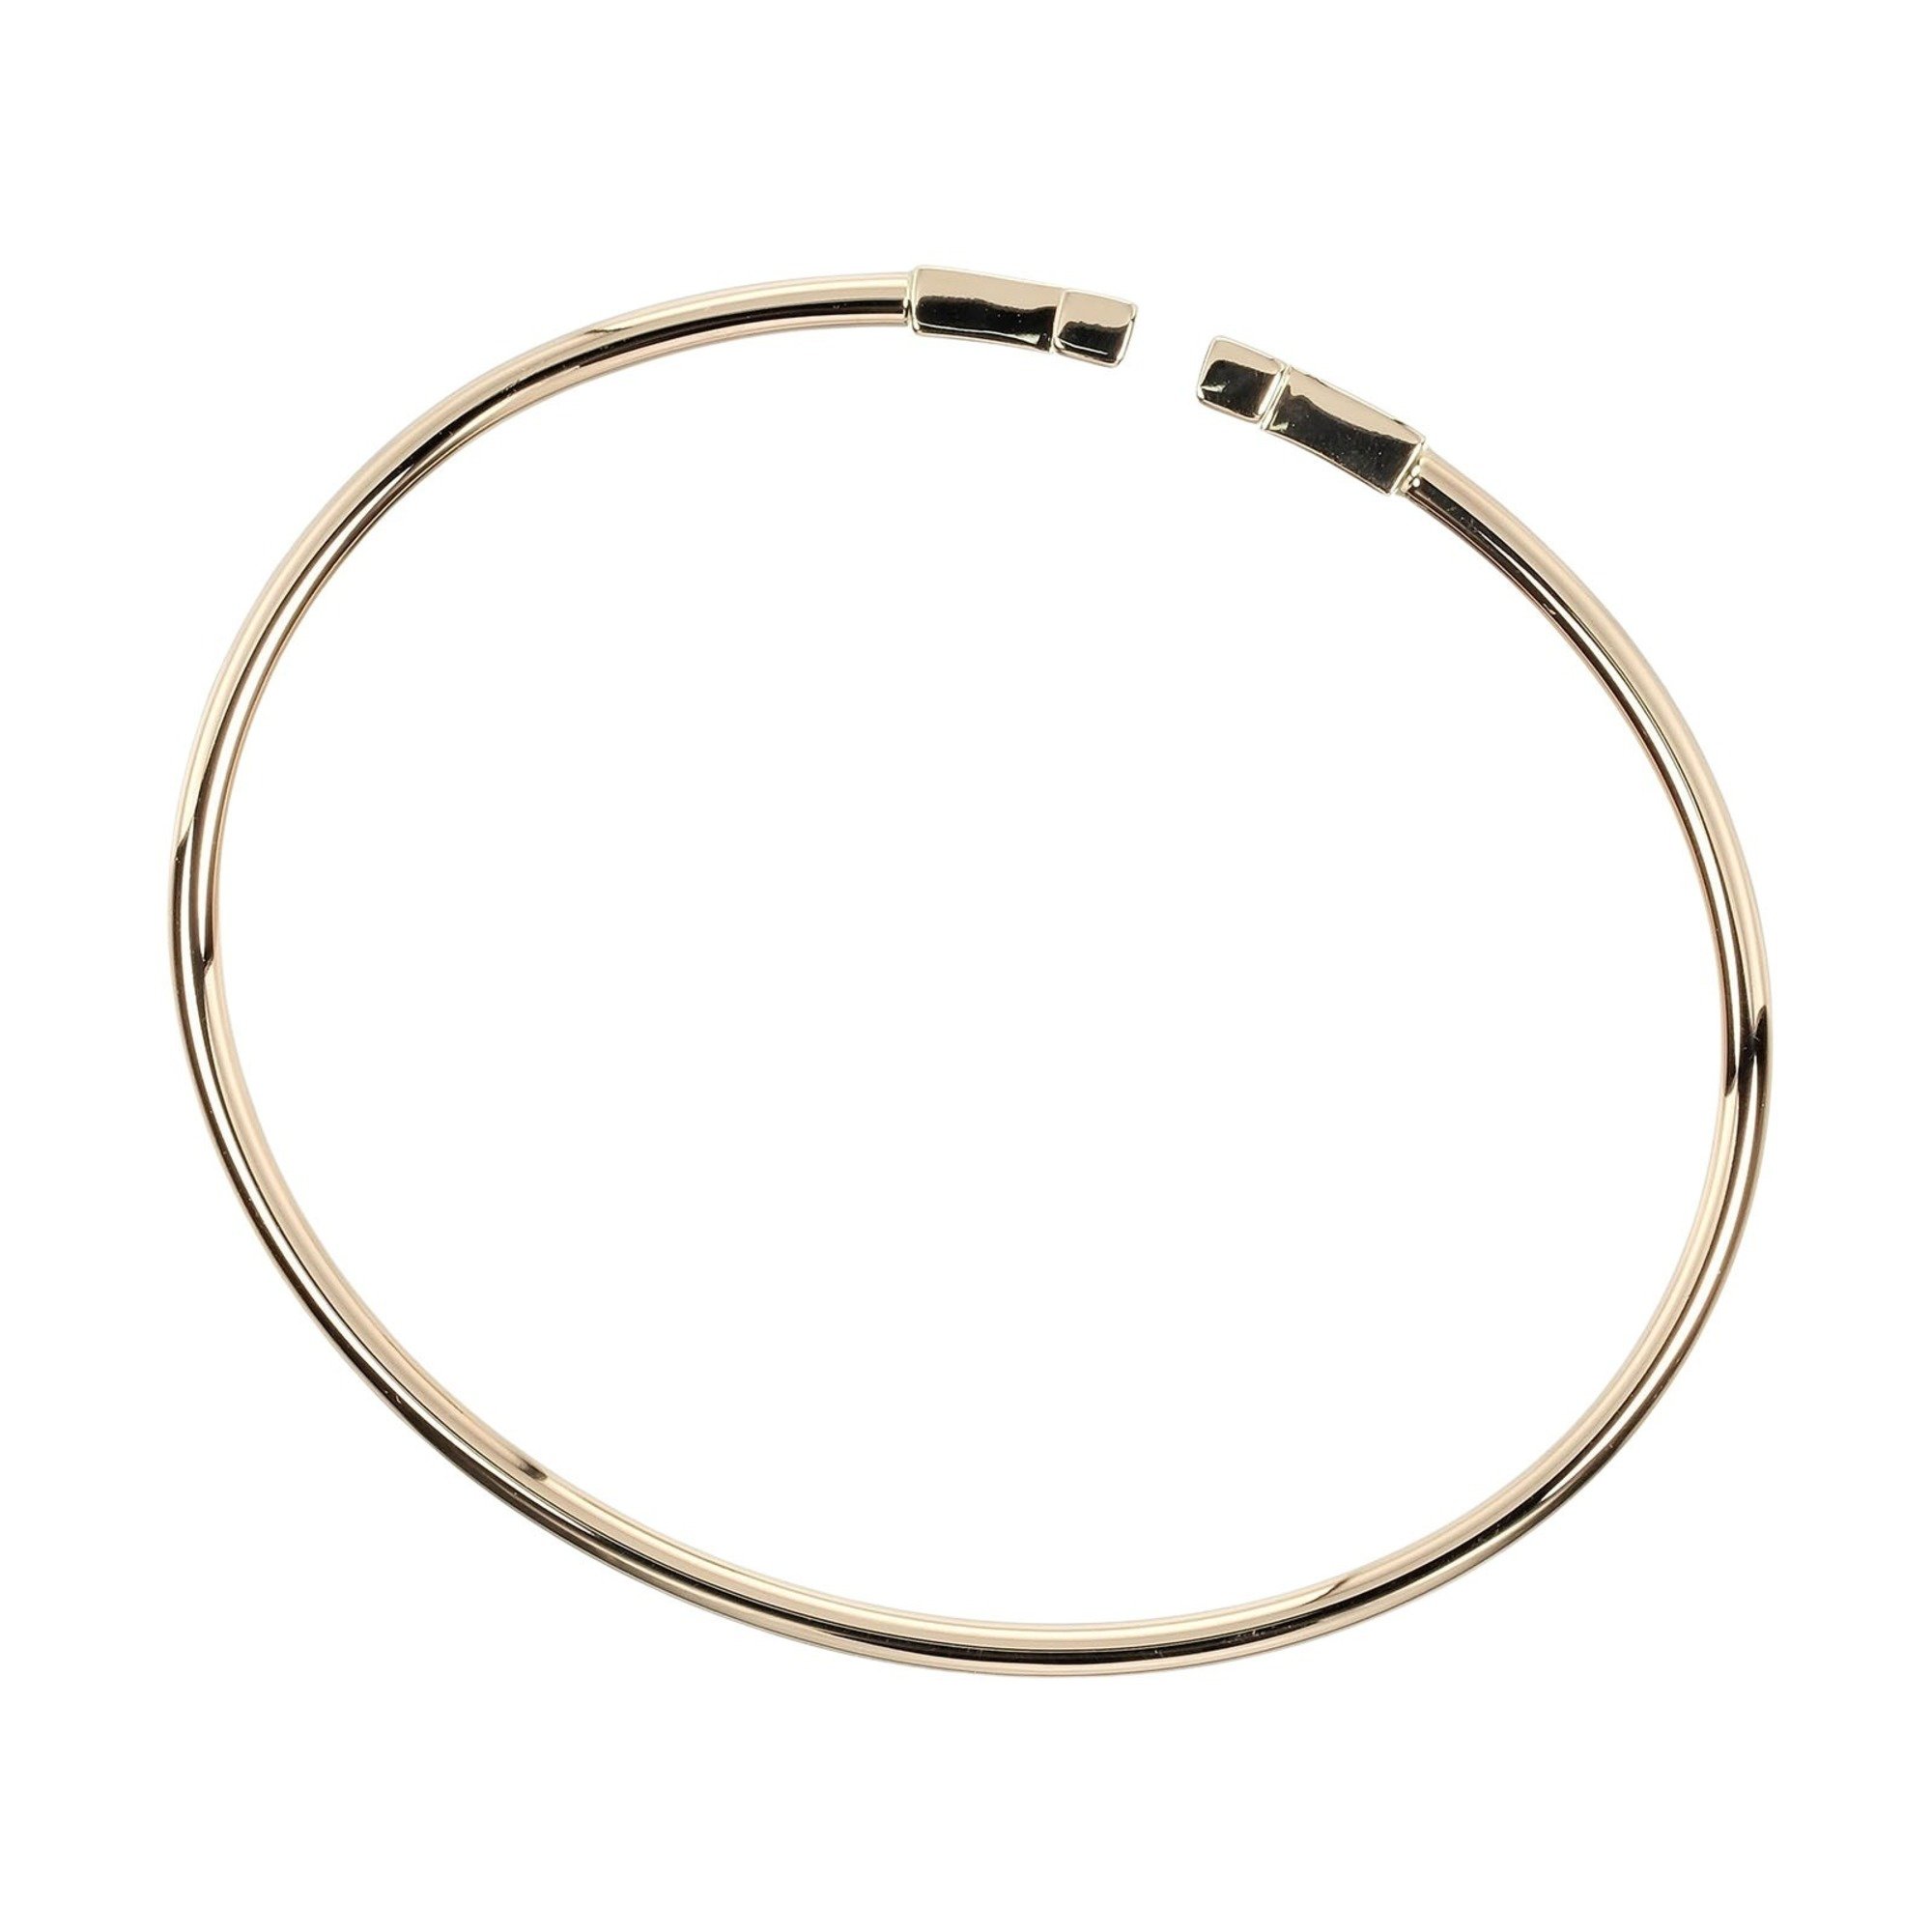 Tiffany & Co. T-wire narrow bracelet, SM model, wrist size 15cm, K18 PG, pink gold, approx. 5.65g, I132124052